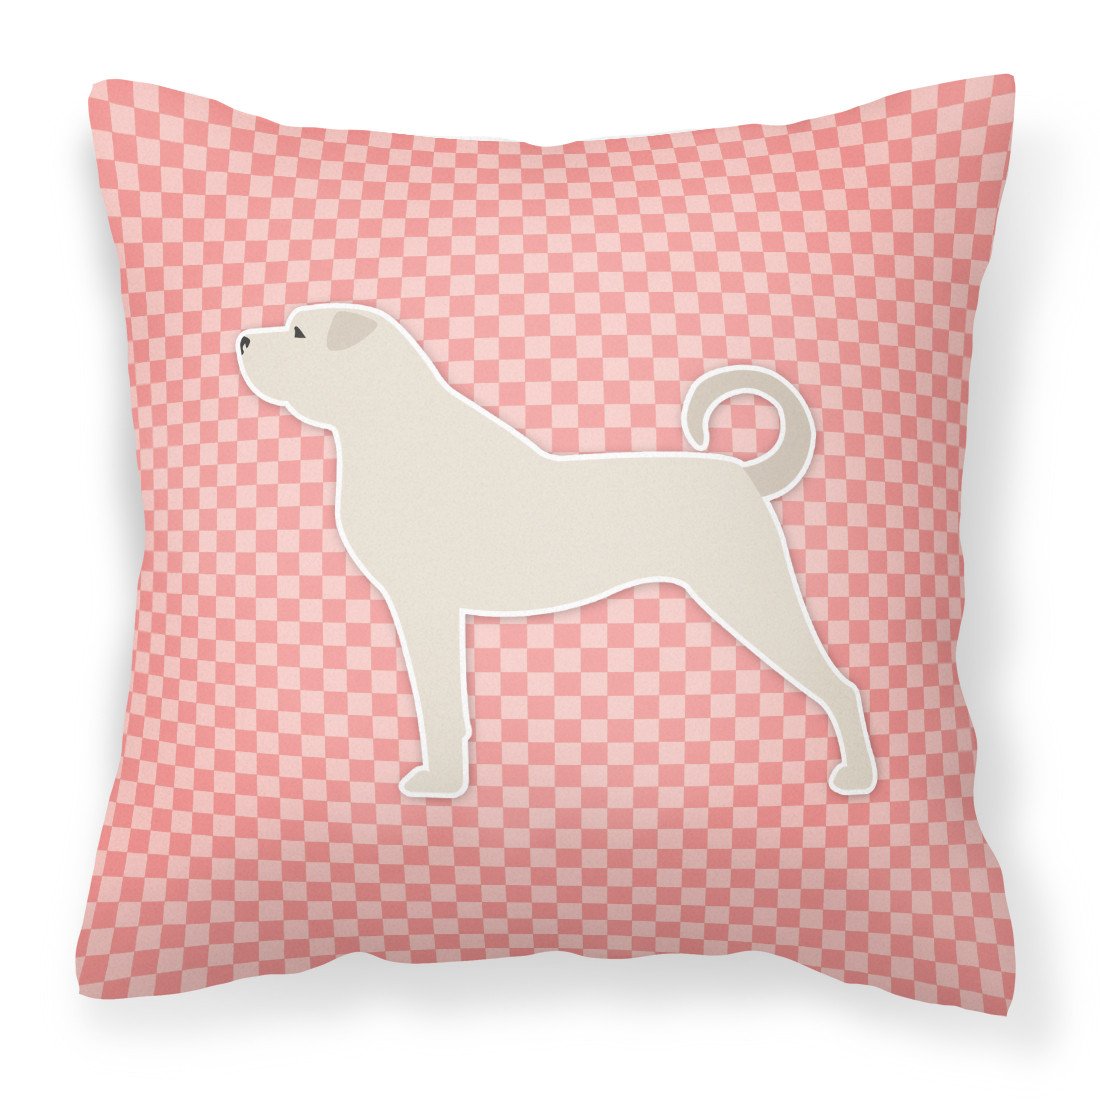 Anatolian Shepherd Checkerboard Pink Fabric Decorative Pillow BB3677PW1818 by Caroline's Treasures